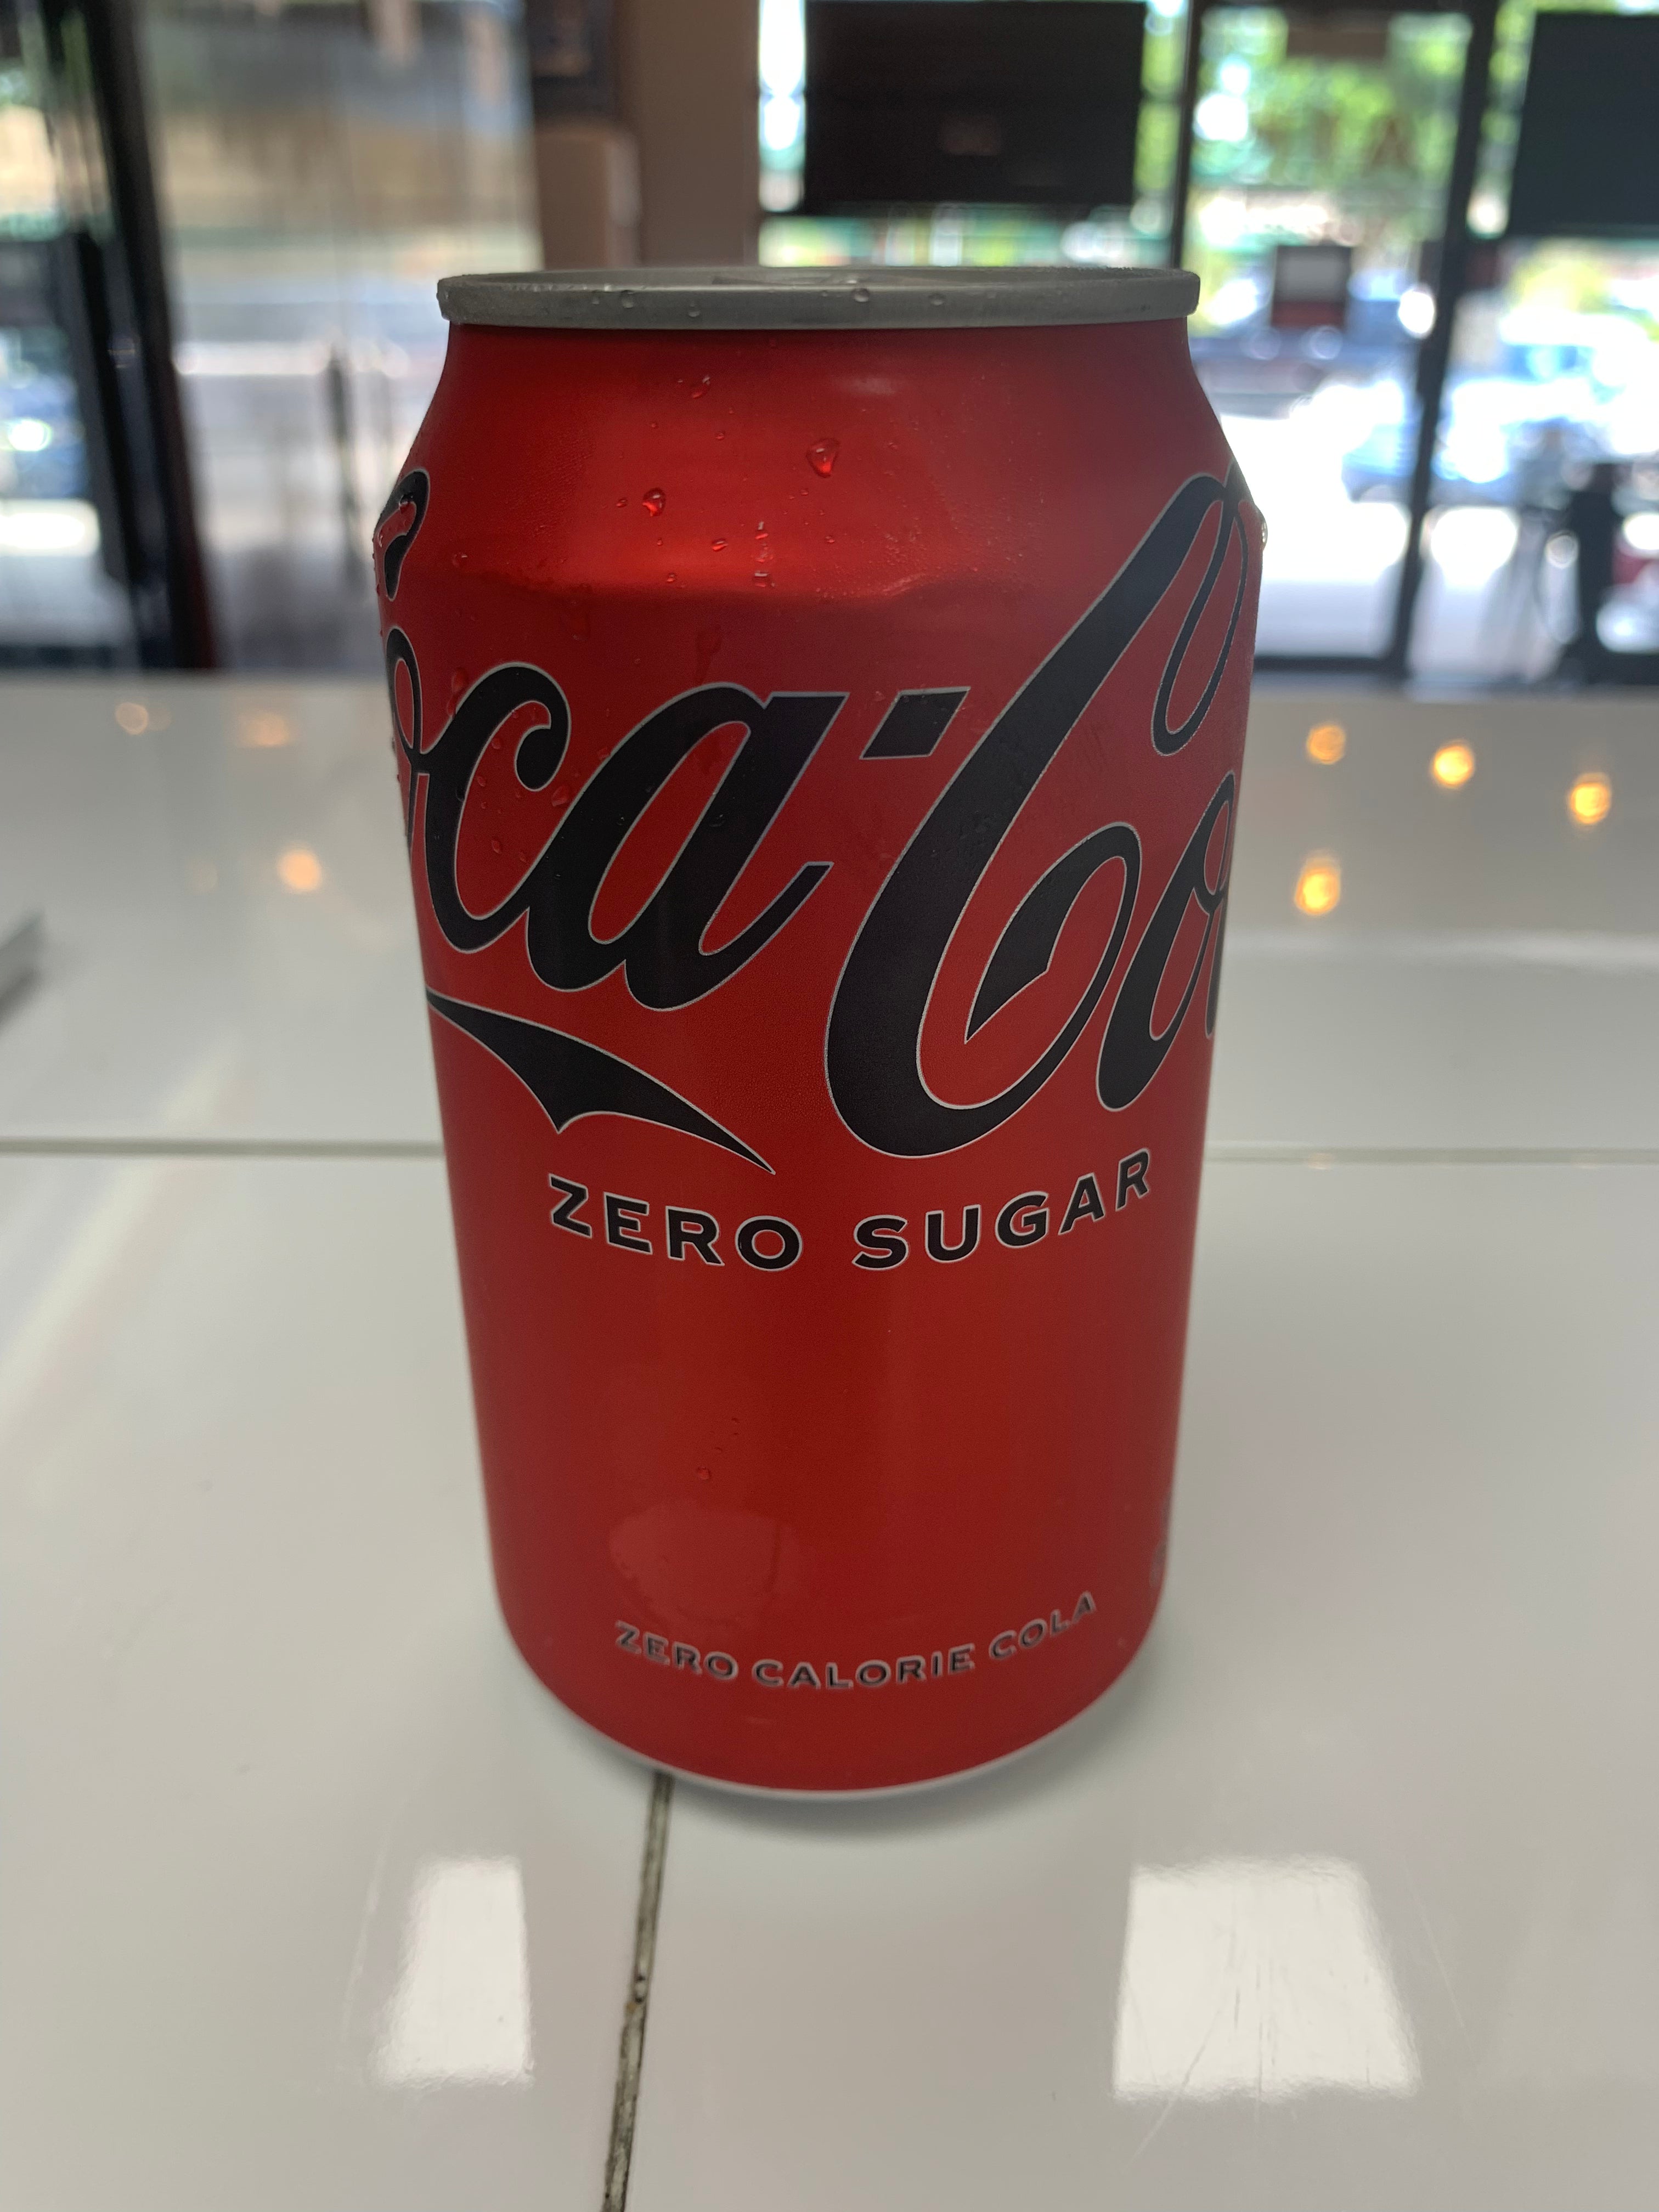 American Soda